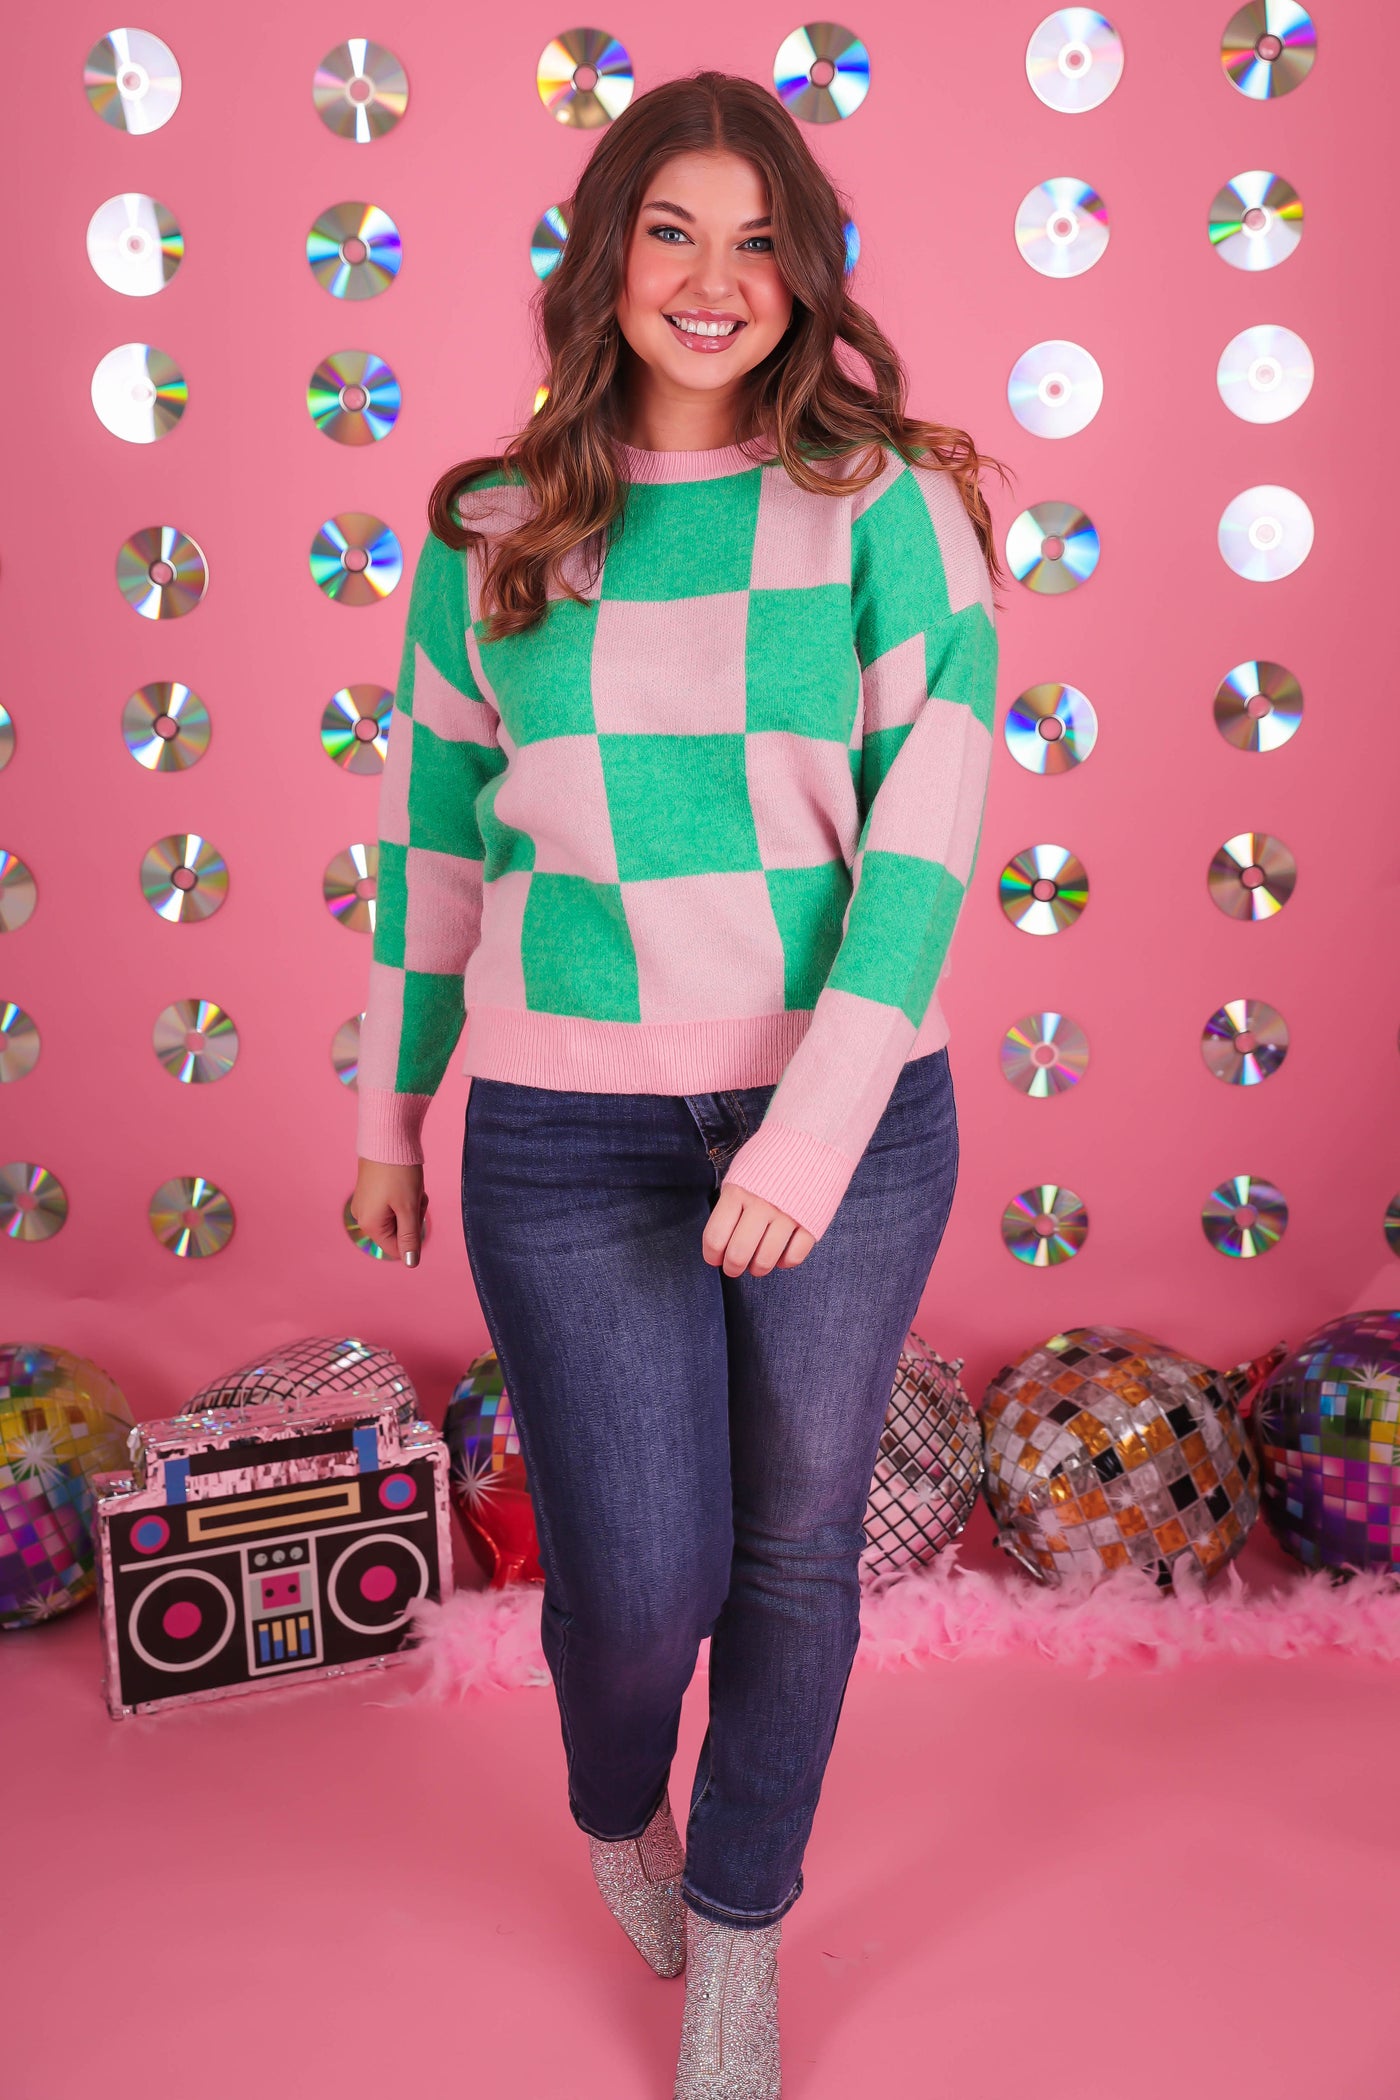 Women's Fun Pink and Green Sweater- Women's Checkered Sweater- Main Strip Sweater